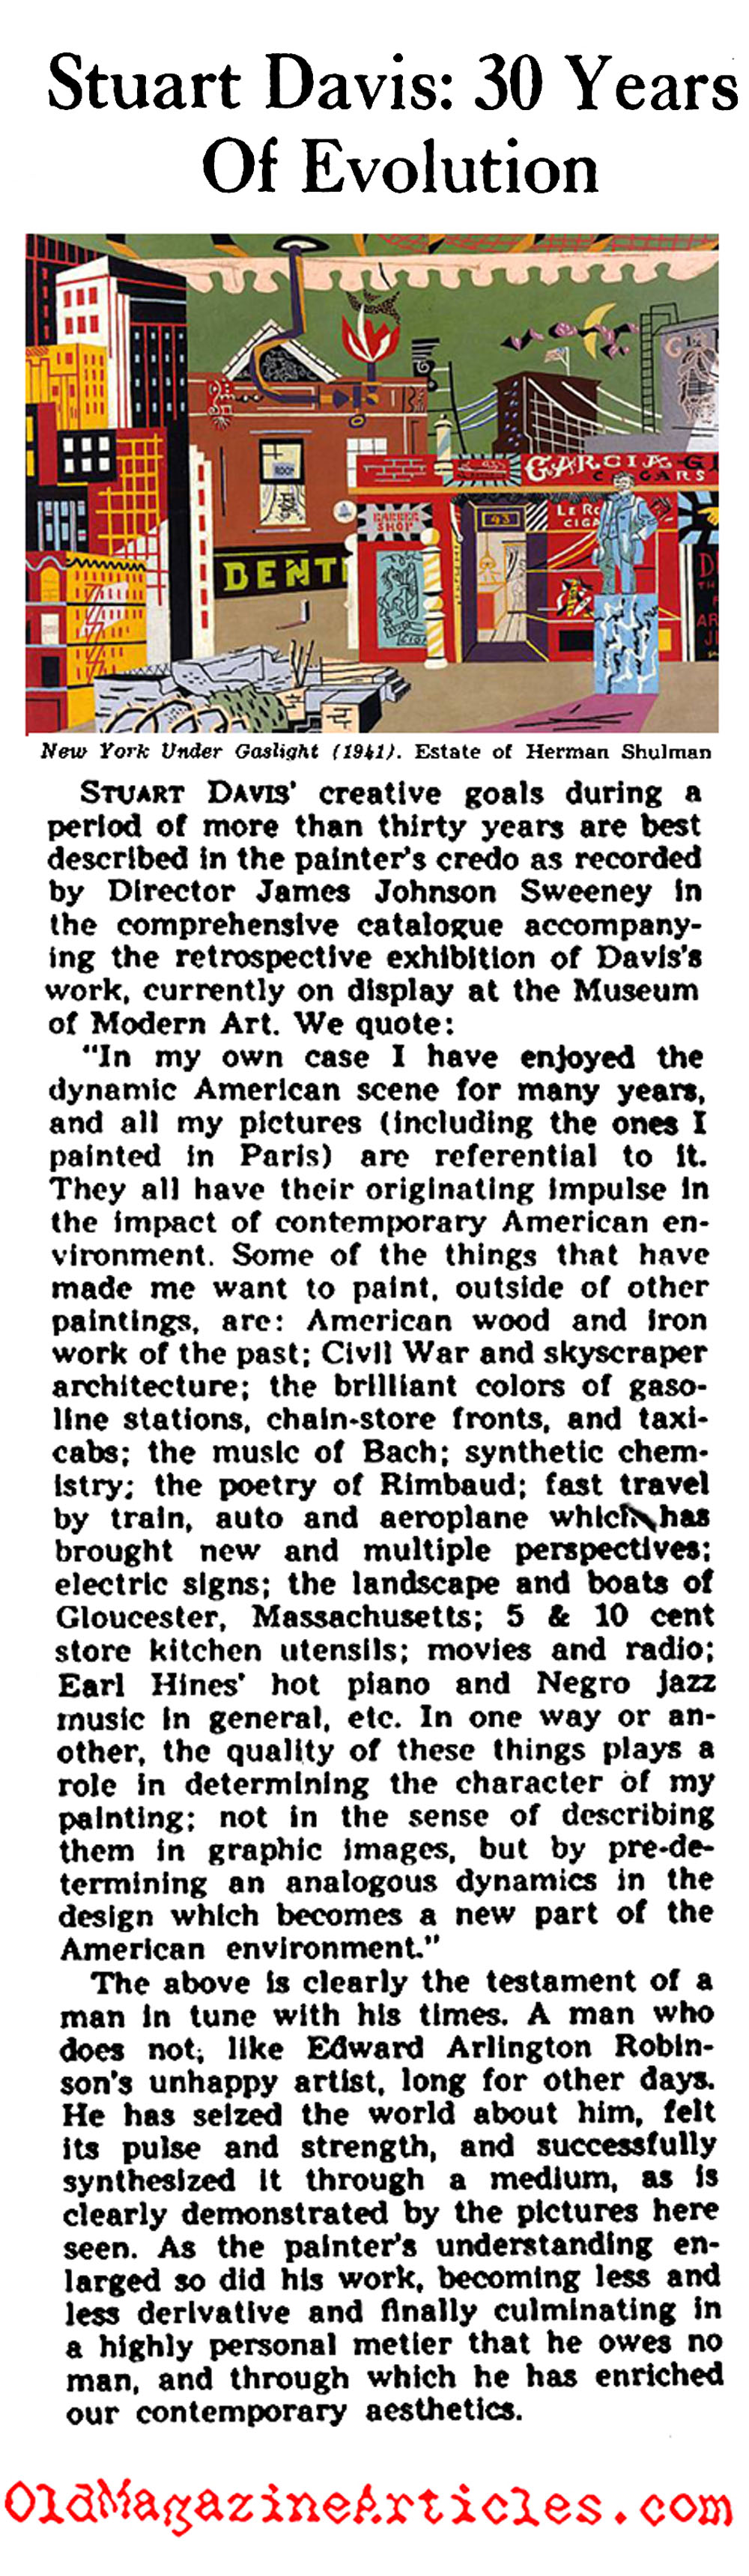 Stuart Davis: Thirty Years of Evolution (Art Digest Magazine, 1945)